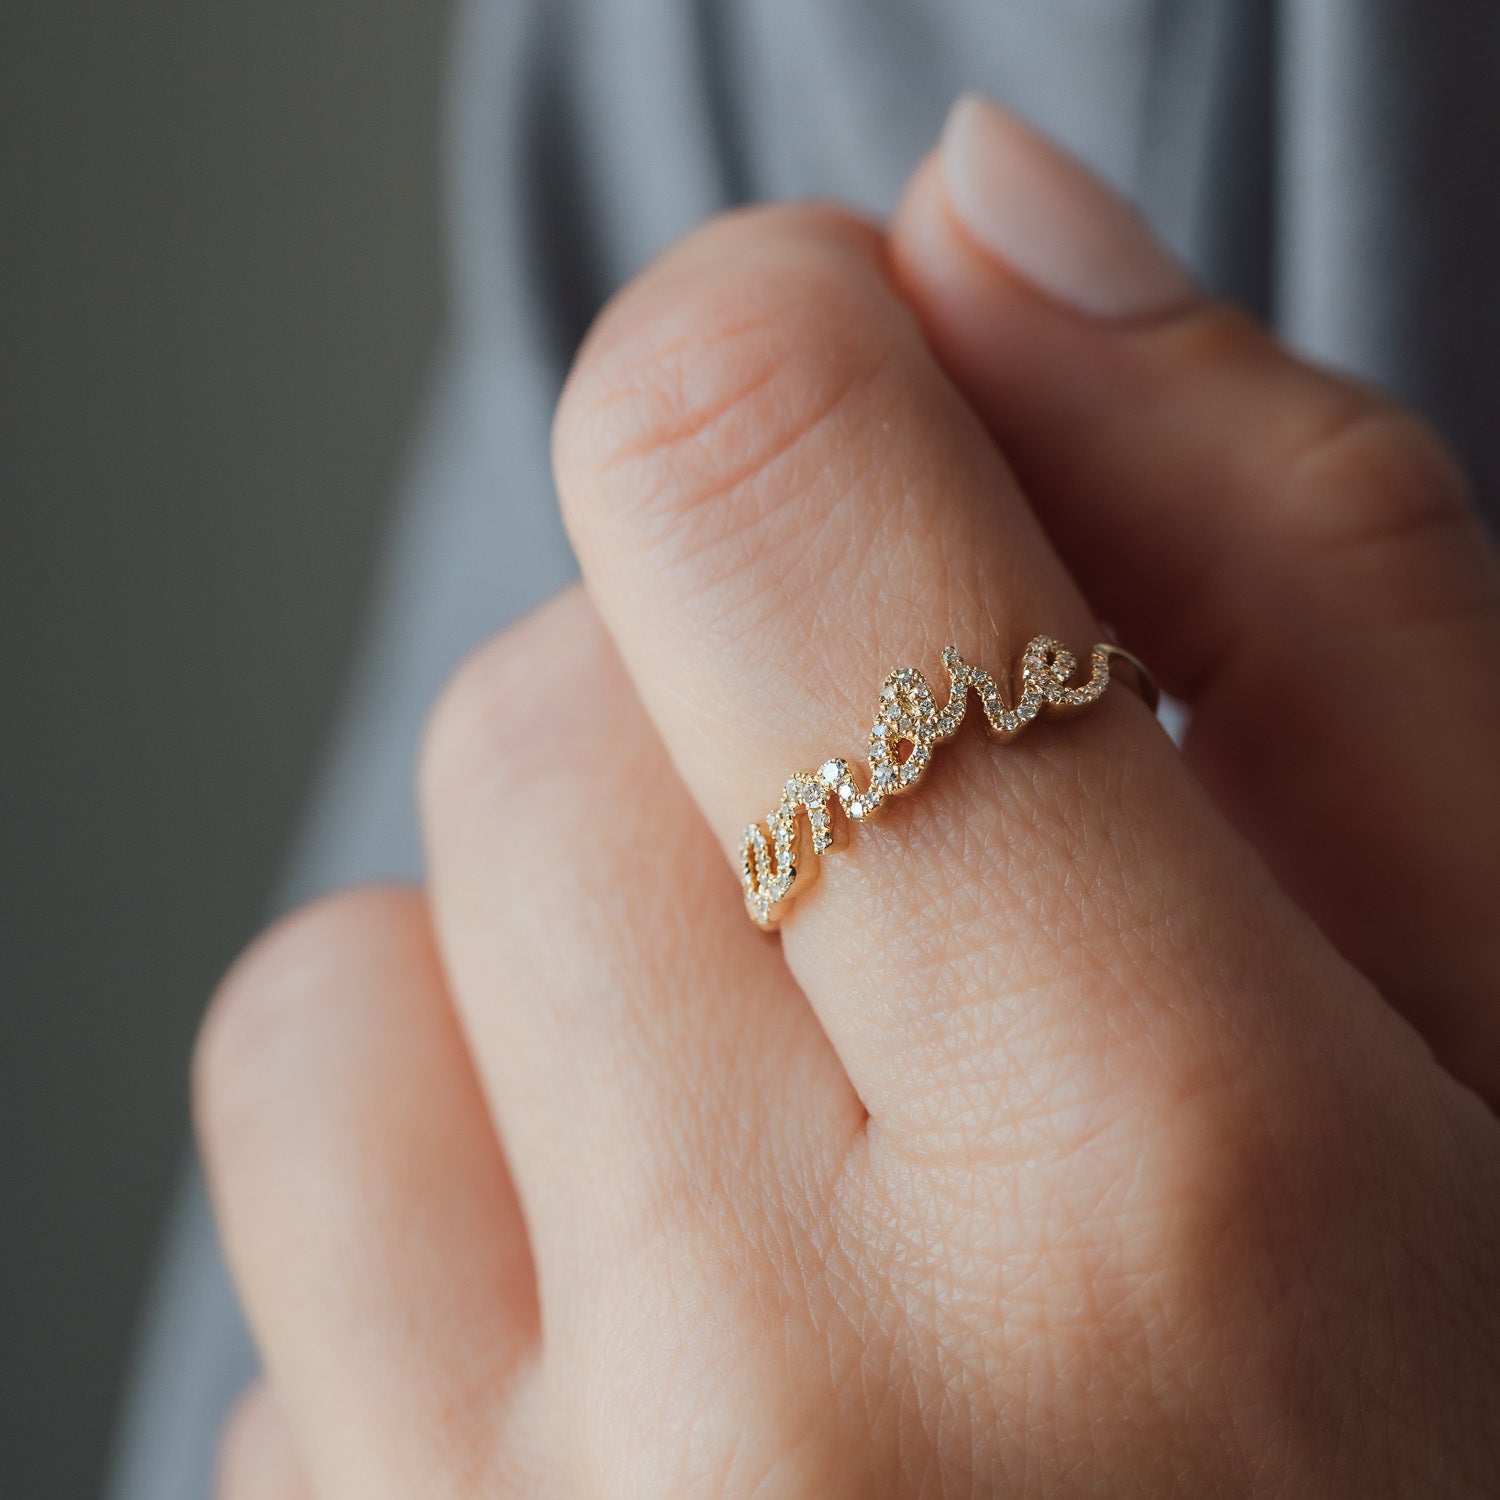 Two-Finger Name Ring - Lauren Conrad Inspired Design in 10k Yellow Gold -  